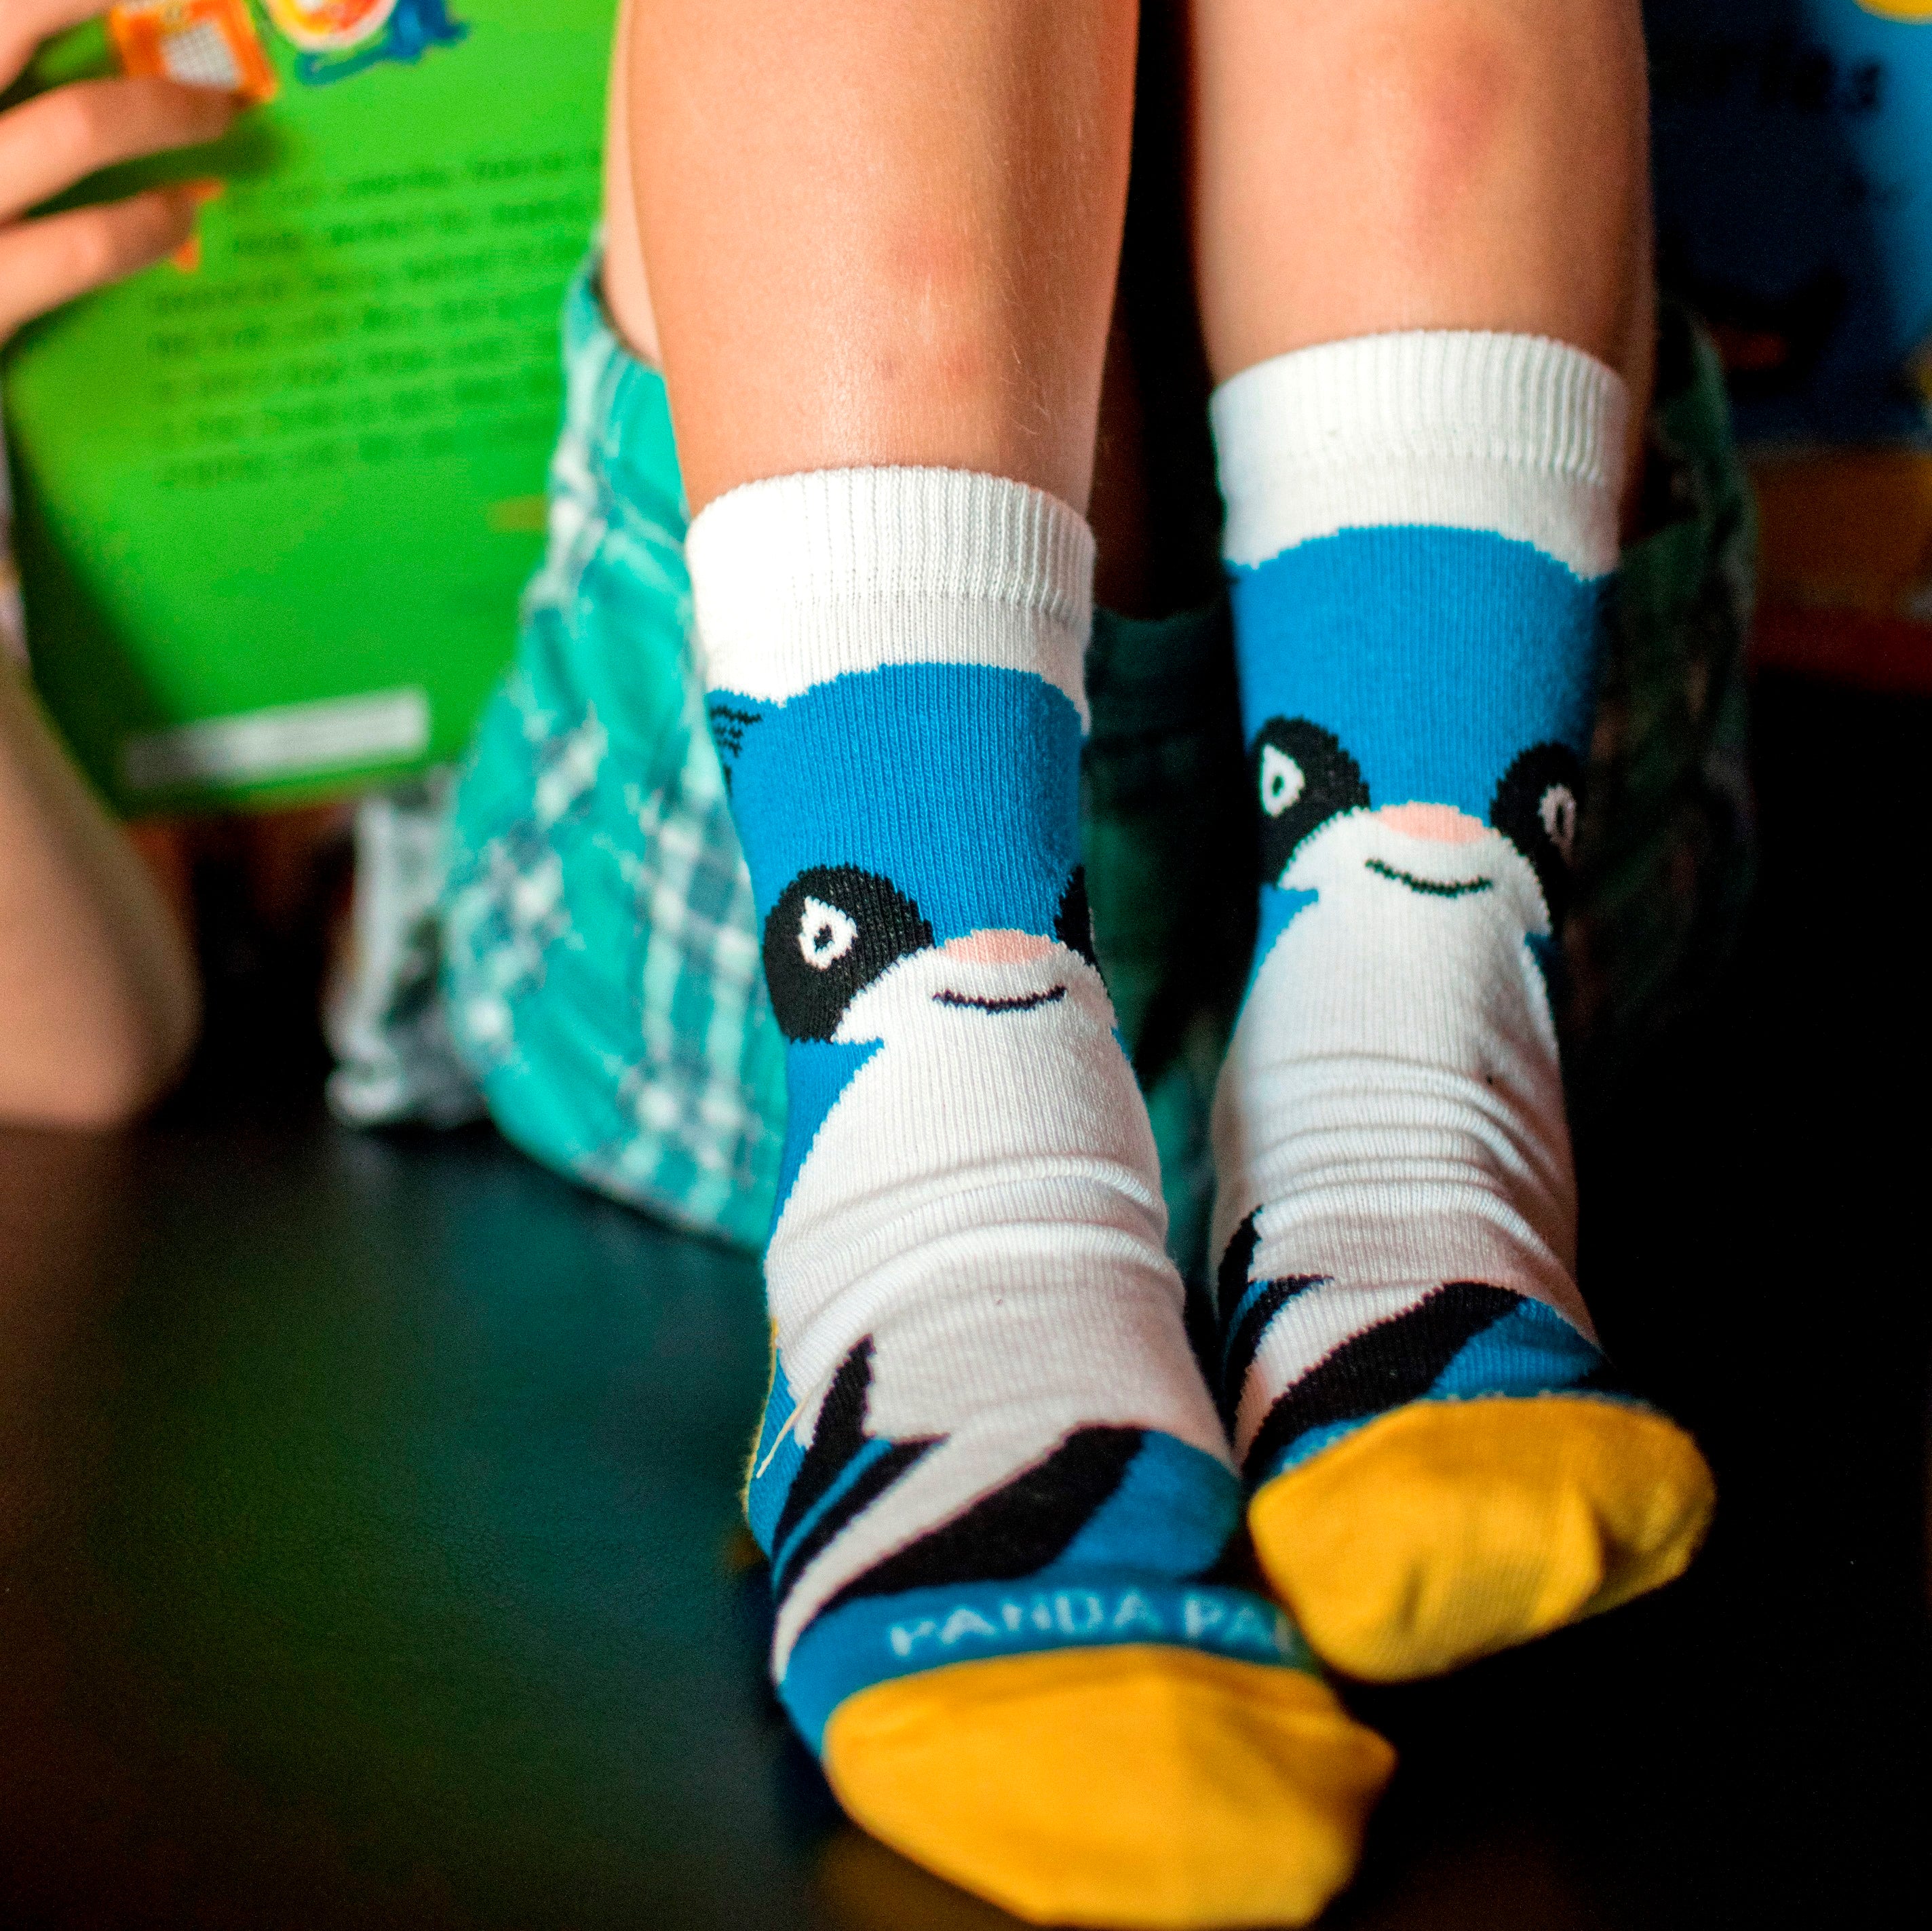 Blue Raccoon Socks from the Sock Panda (Ages 3-5)